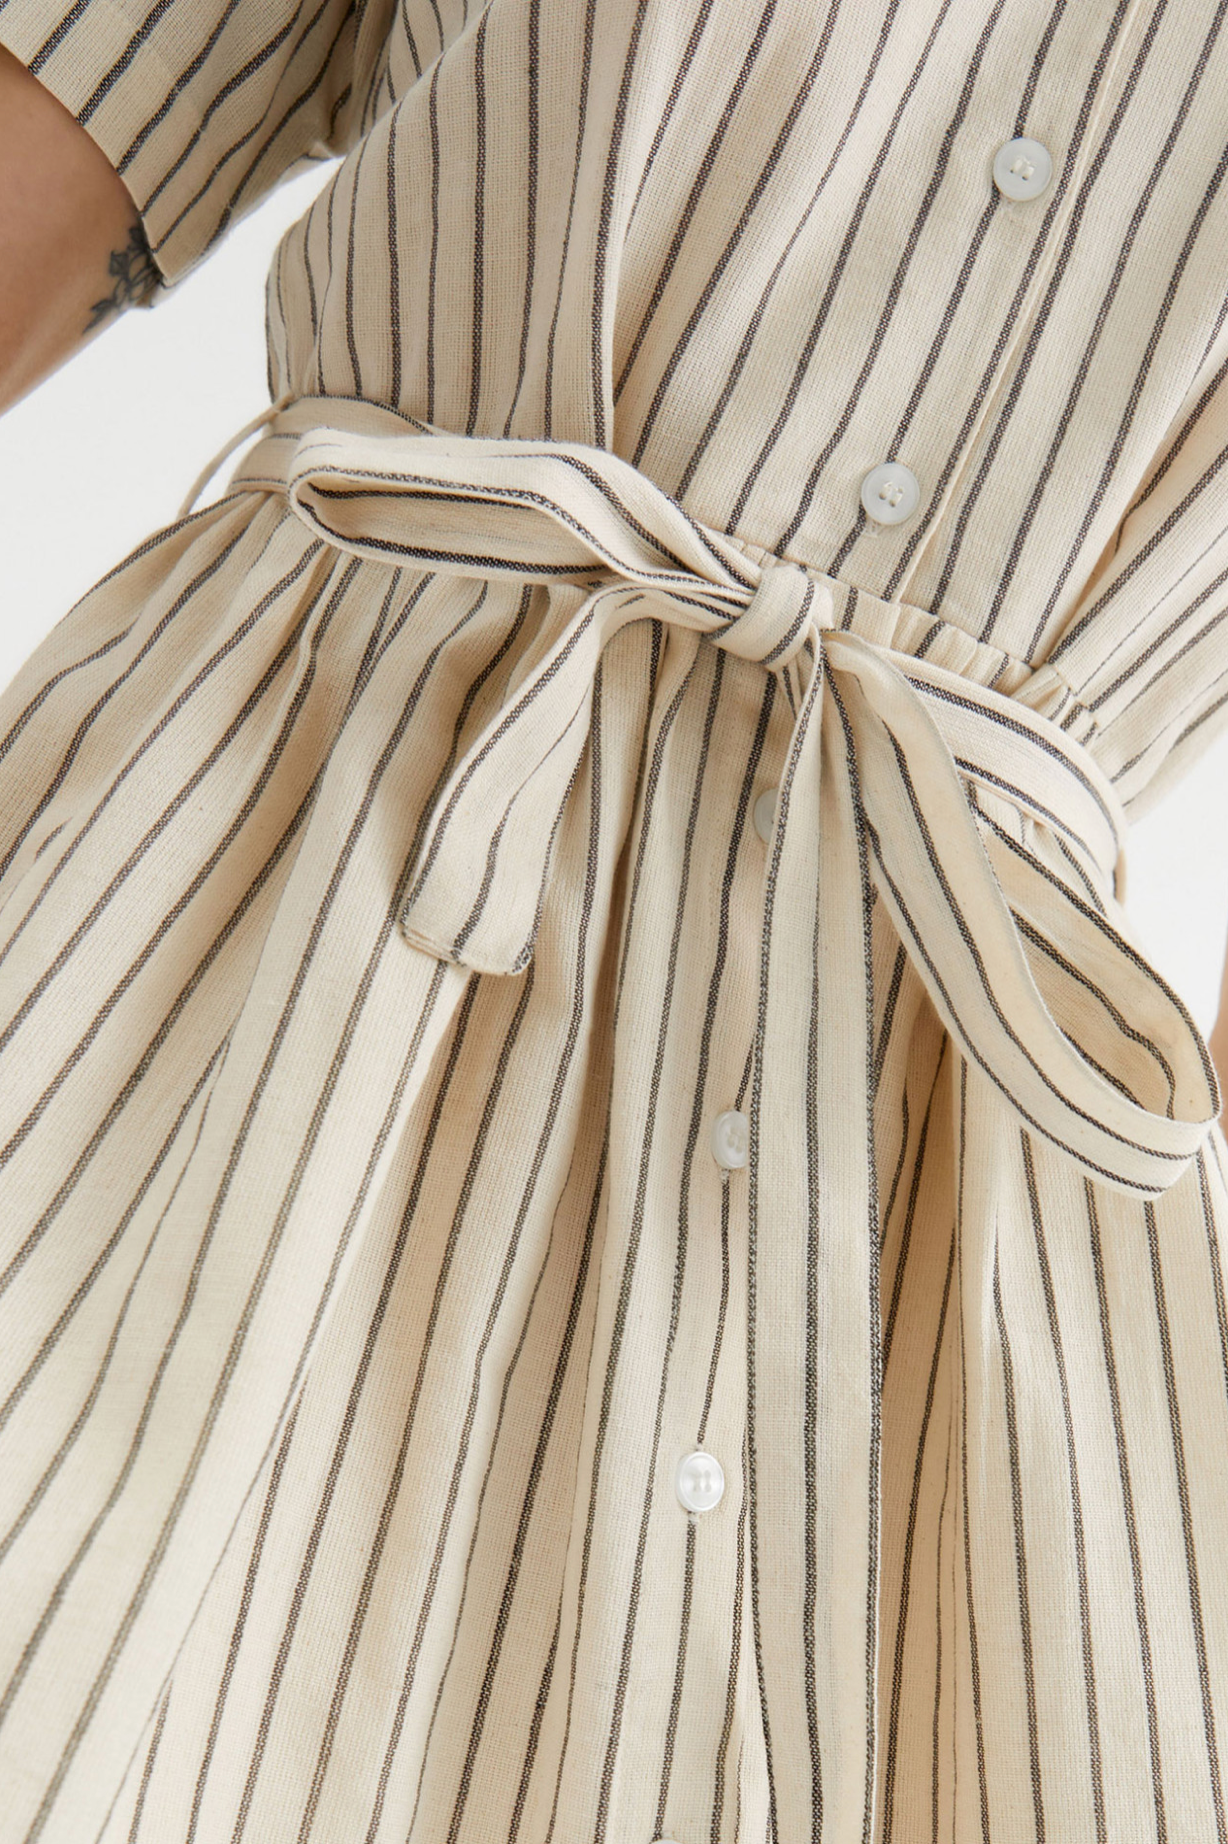 Stripe print midi shirt dress with belt